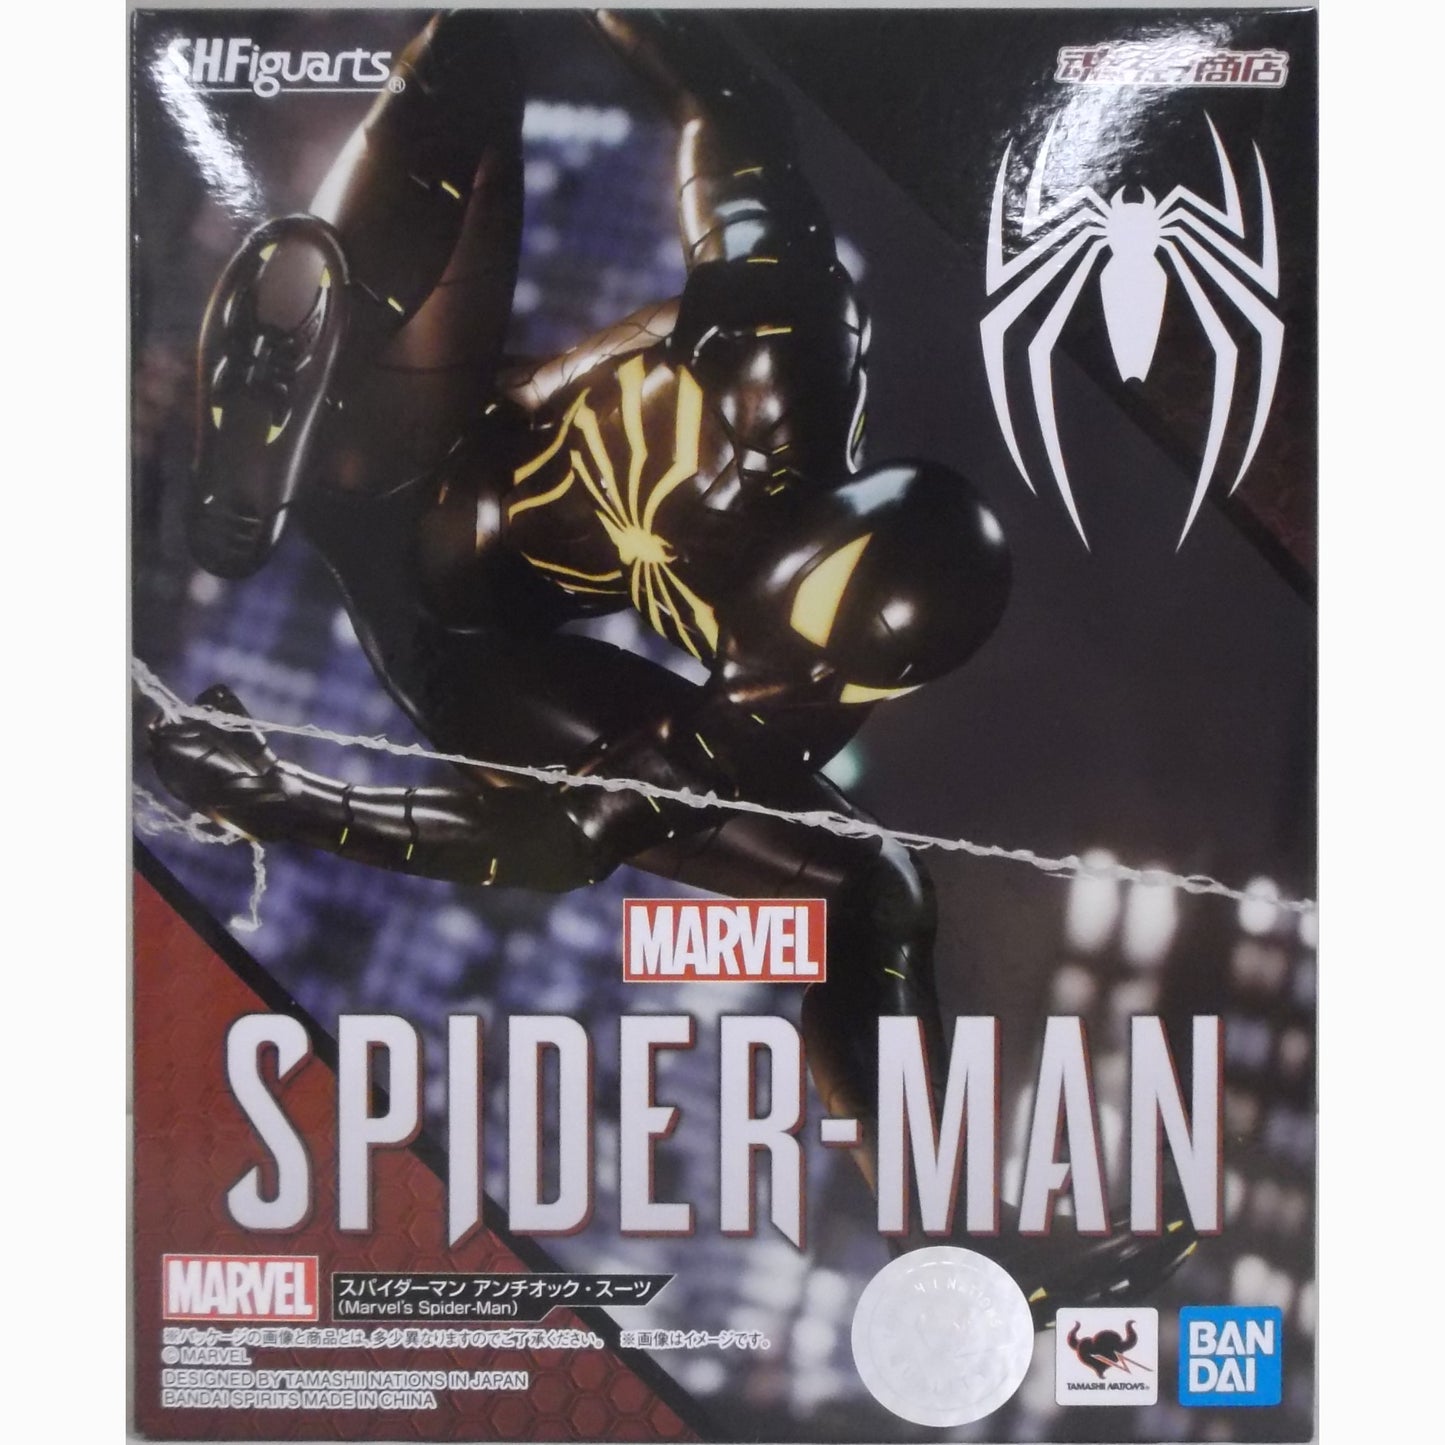 S.H. Figuarts Marvels Spiderman - Spiderman Anti-Ock Suit TamashiWeb Exclusive